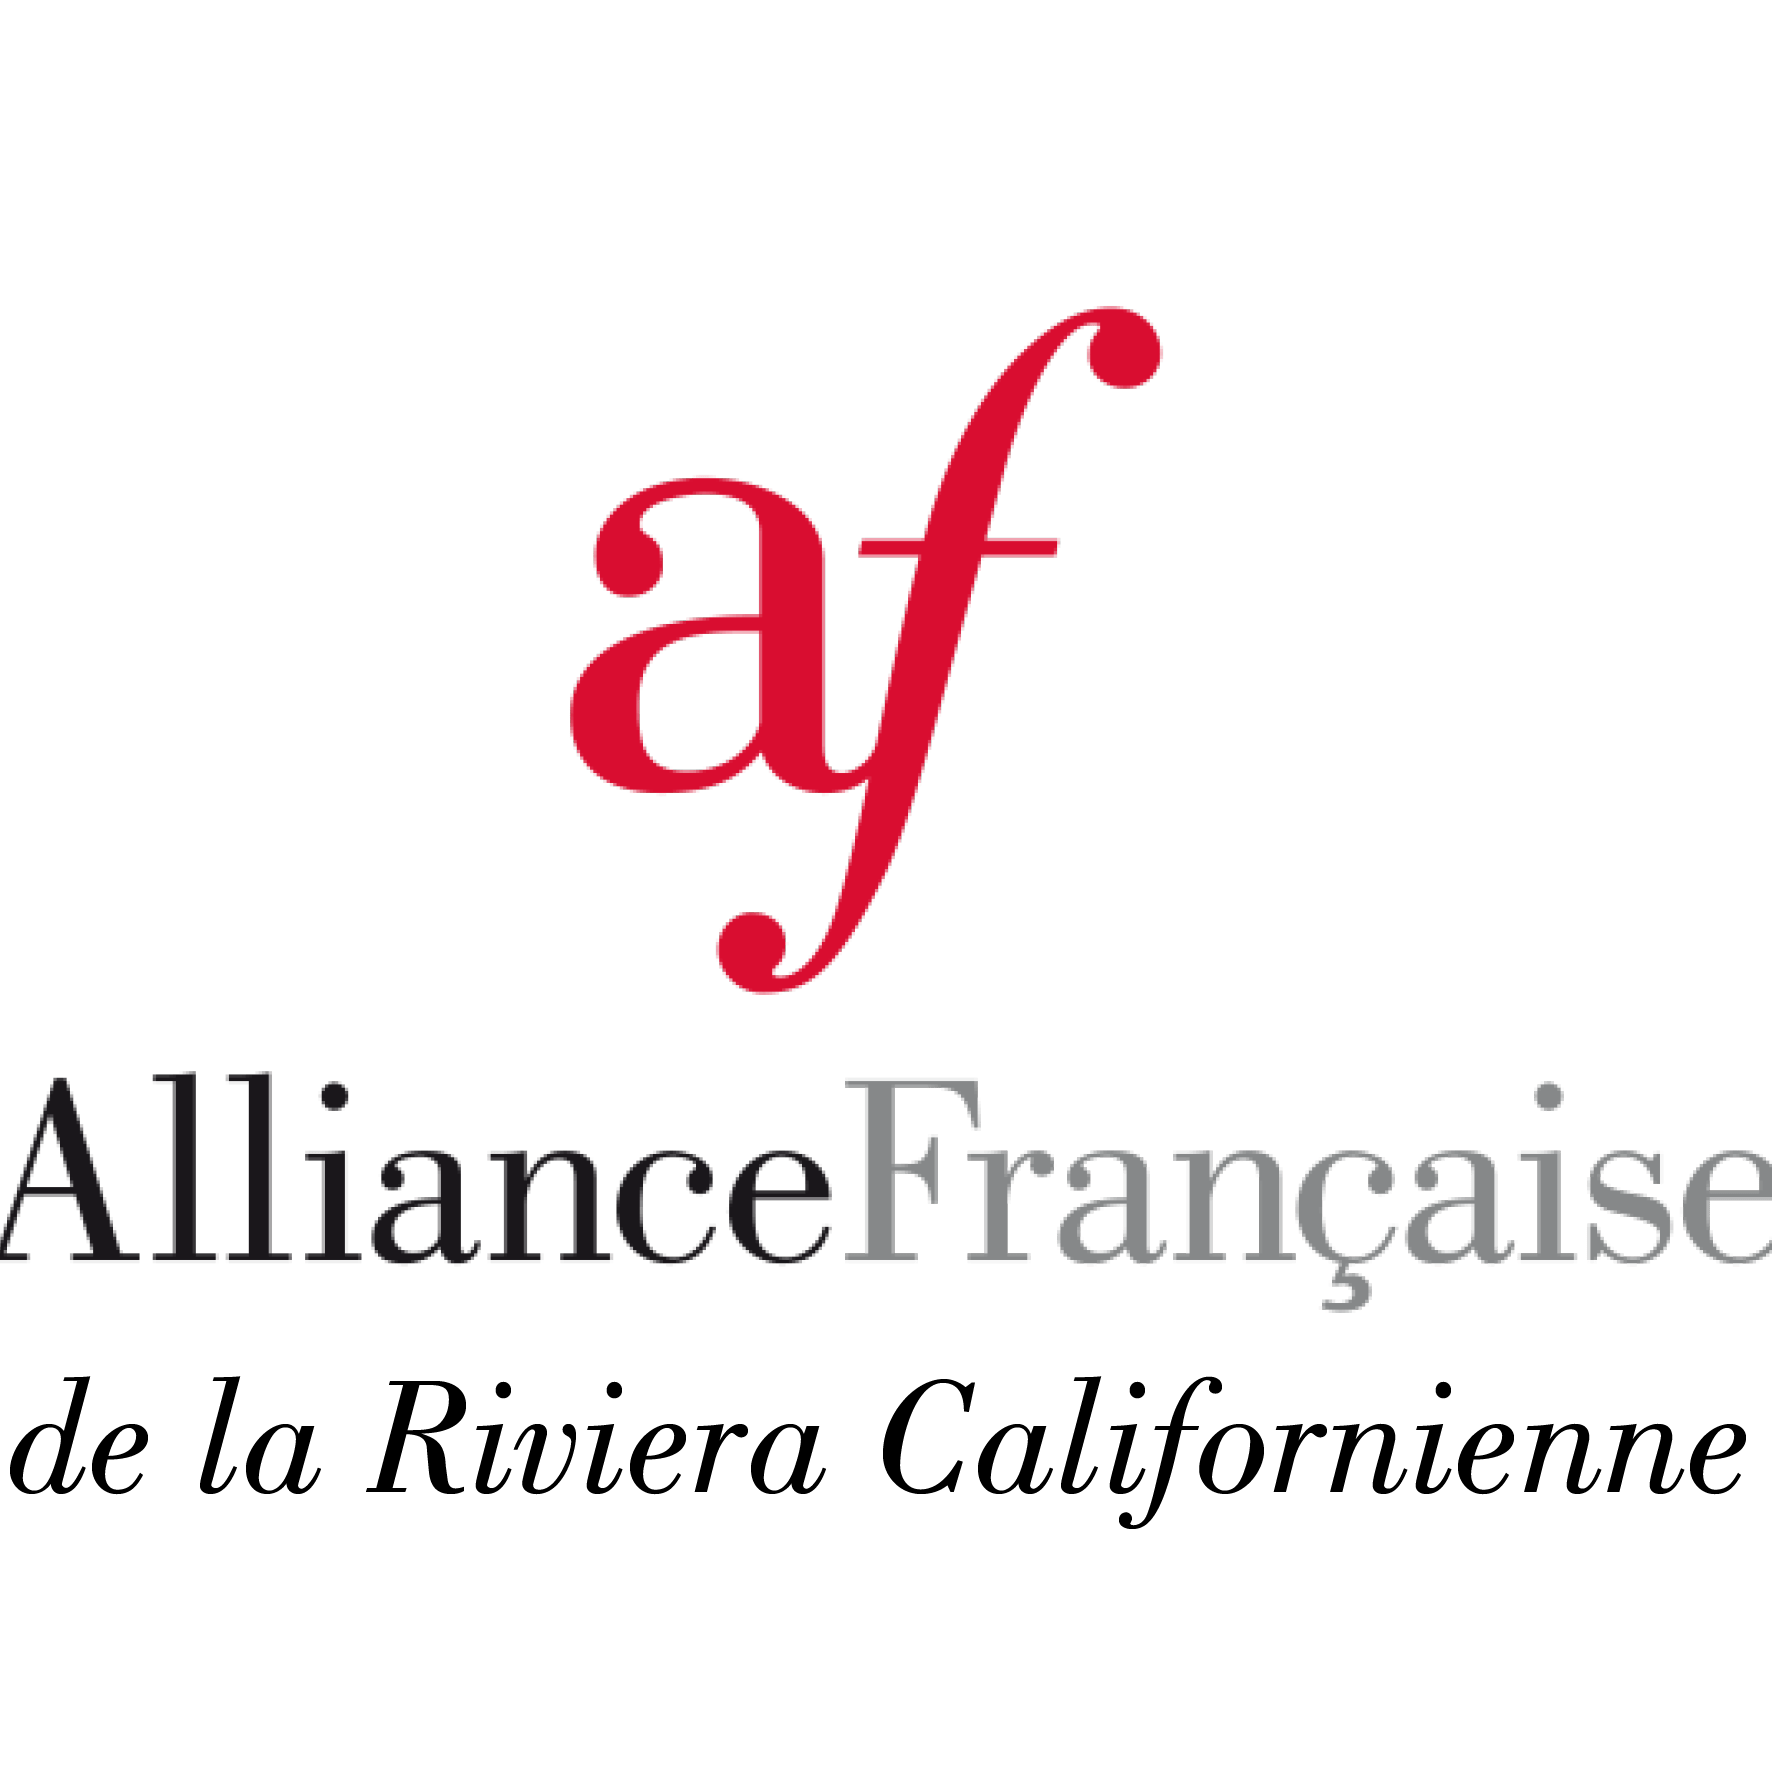 French Speaking Organization in San Diego California - Alliance Francaise de la Riviera Californienne